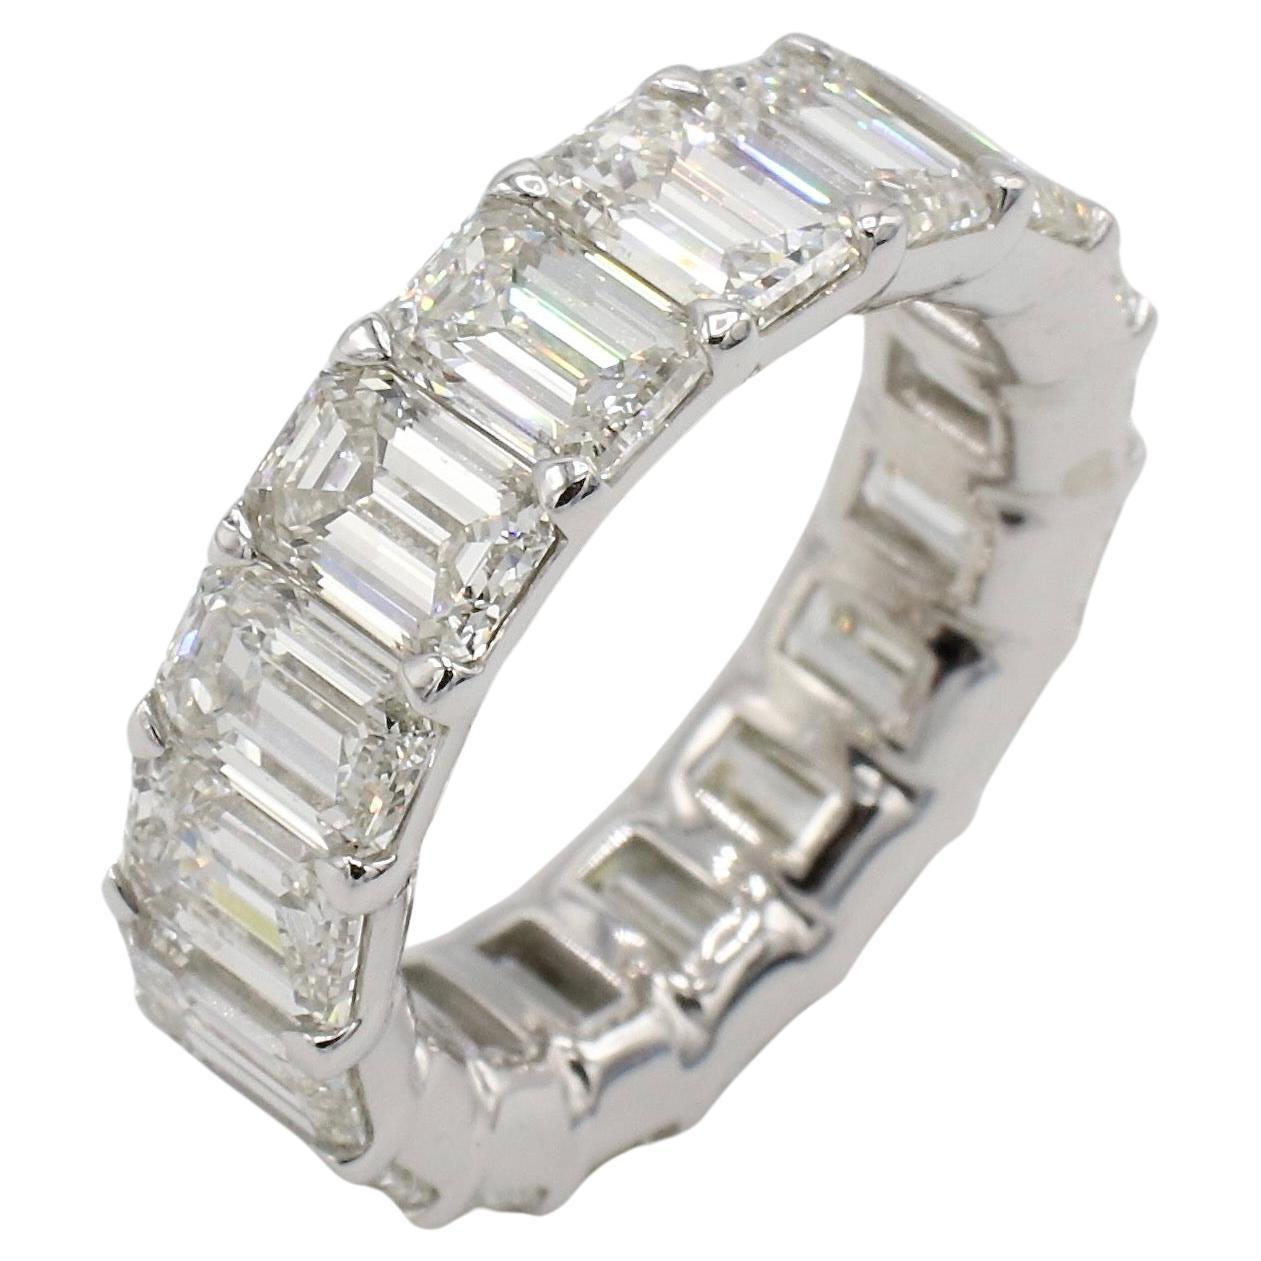 18 Karat White Gold 8.75 Carat Emerald Cut Natural Diamond Eternity Band Ring 
Metal: 18 Karat White Gold
Weight: 6.2 grams
Diamonds: Approx. 8.75 CTW H-I VS emerald cut natural diamonds 
Size: 5.25 (US)
Width: 6mm
